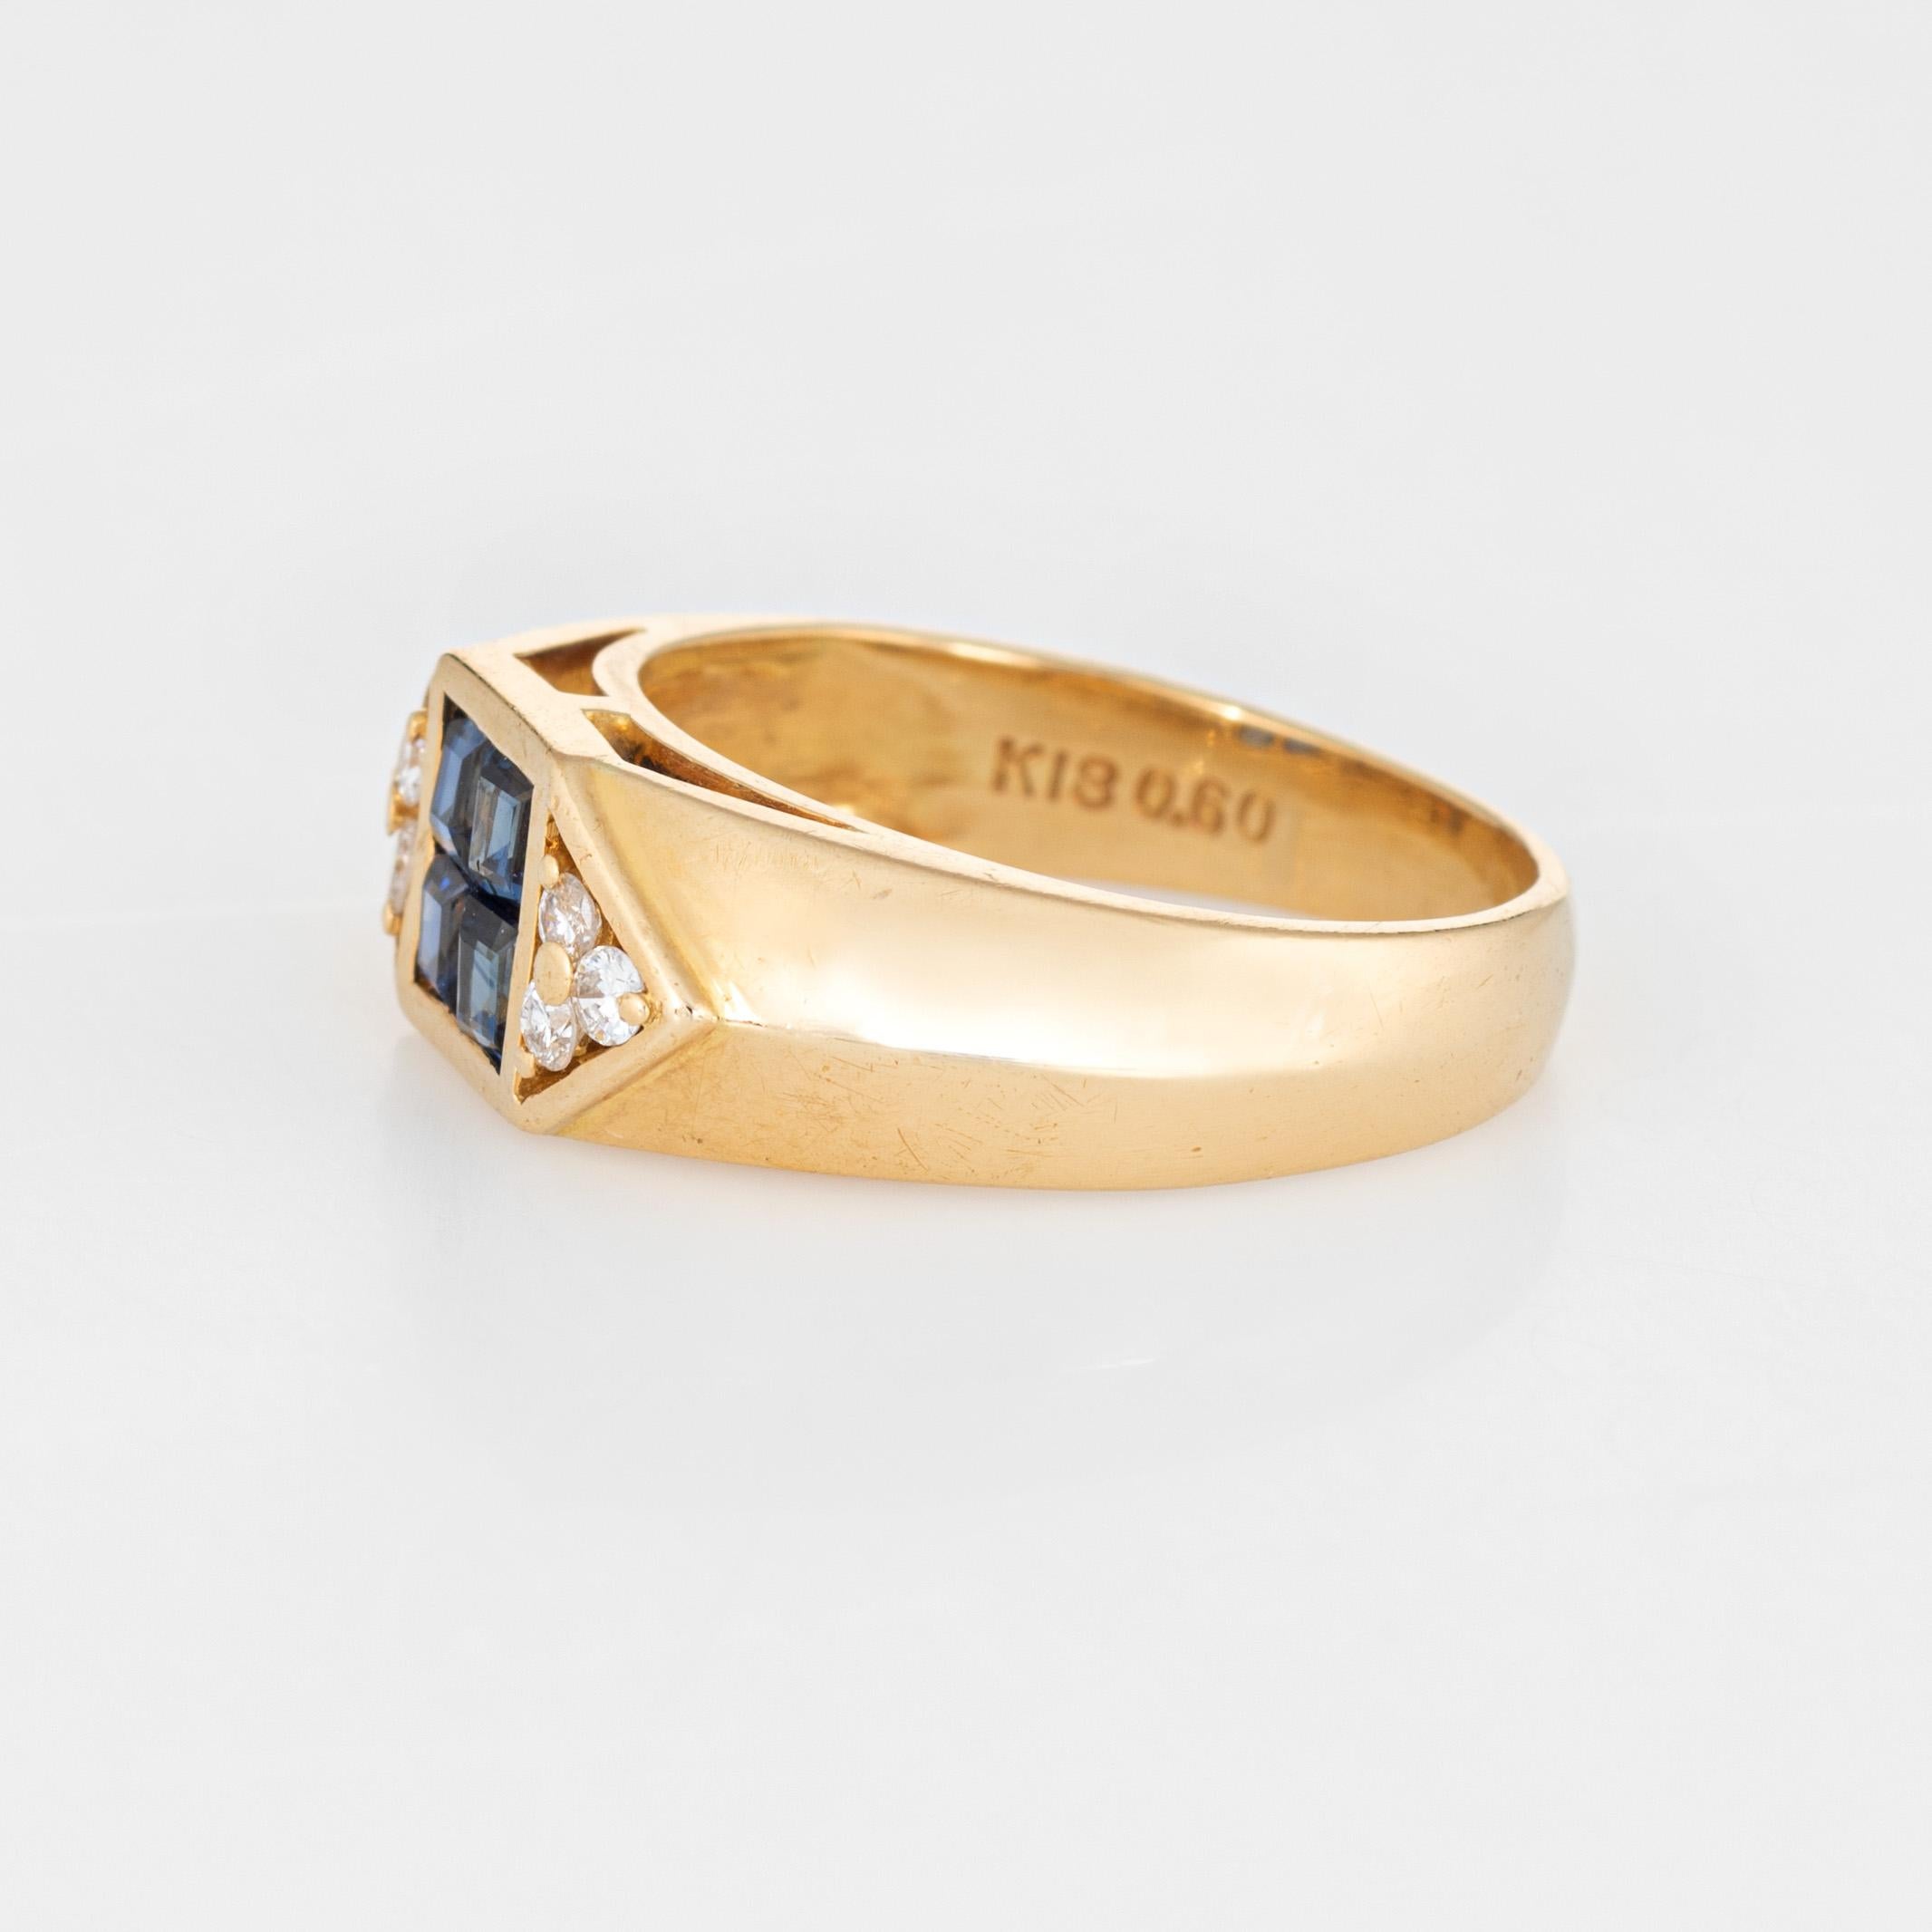 Princess Cut Sapphire Diamond Band Vintage 18 Karat Gold Pinky Ring Estate Fine Jewelry